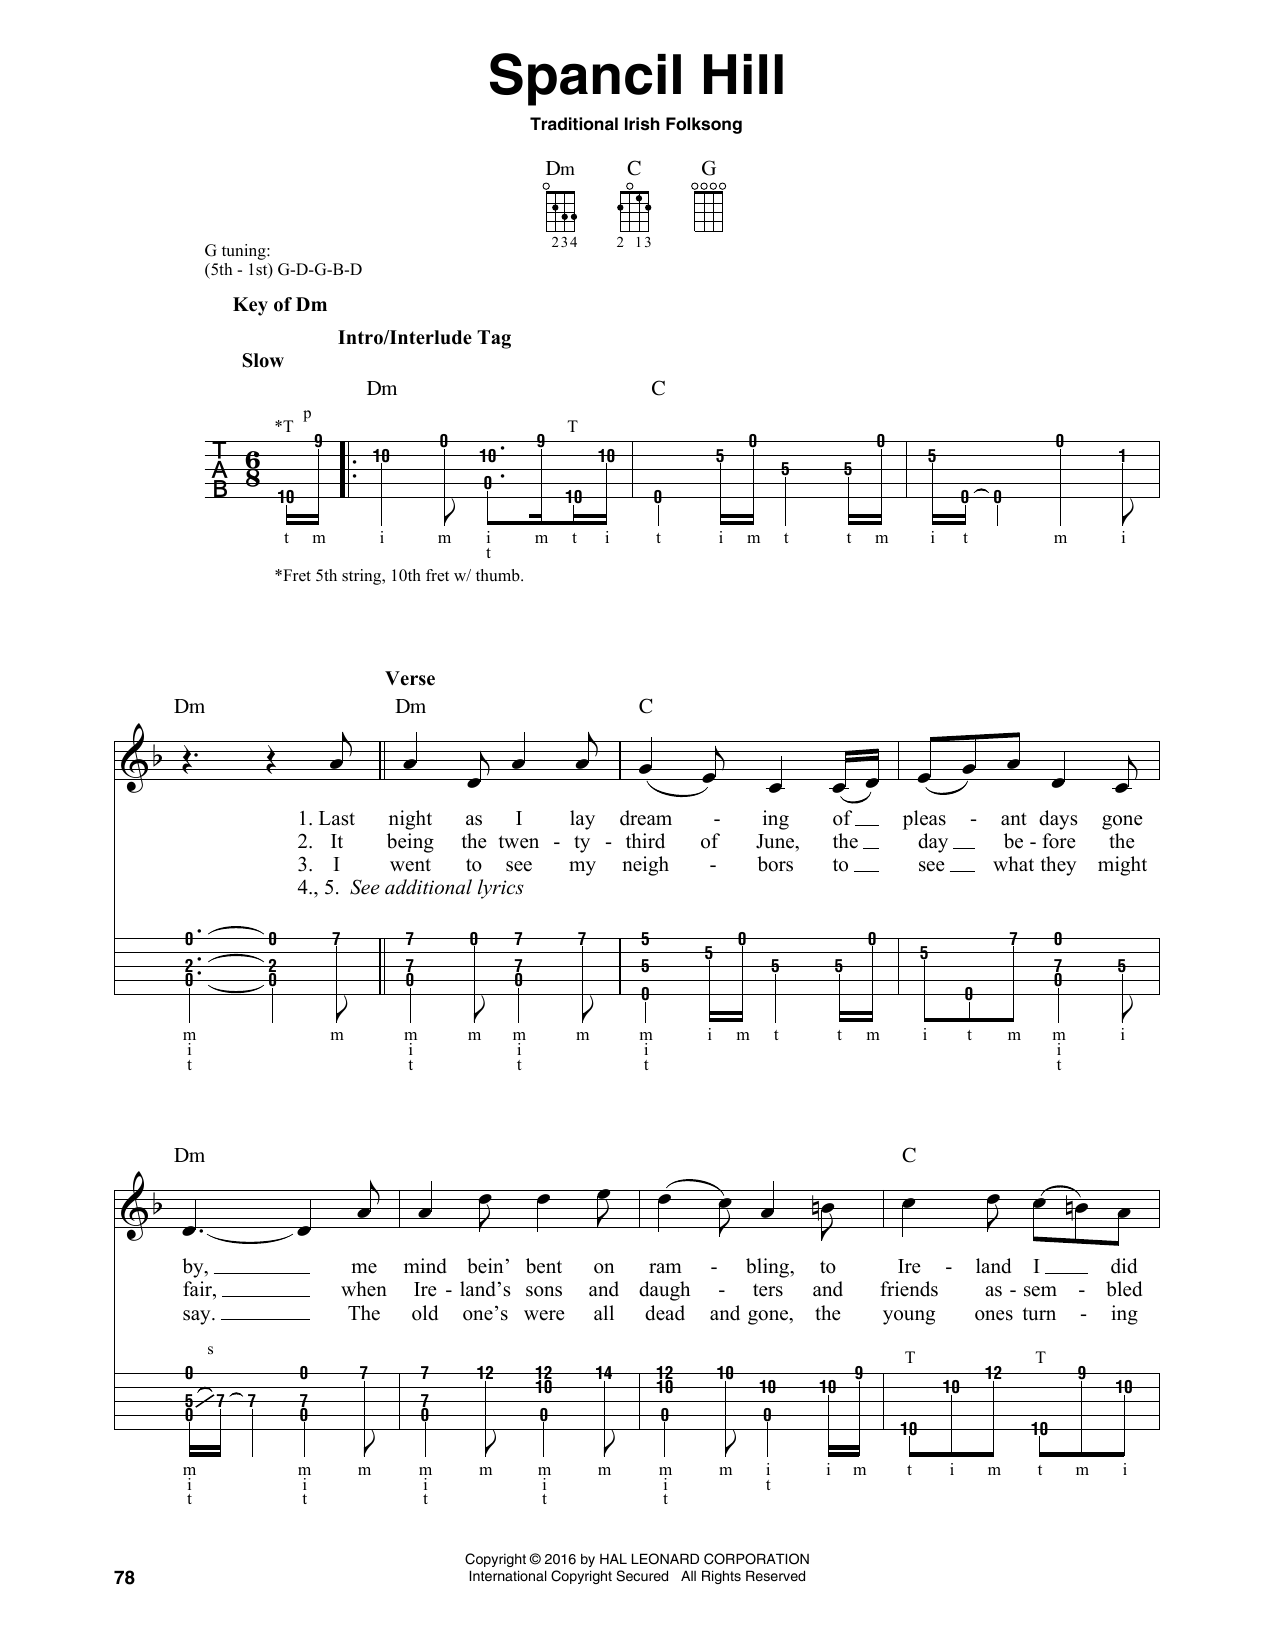 Traditional Irish Folk Song Spancil Hill Sheet Music Notes & Chords for Ukulele - Download or Print PDF